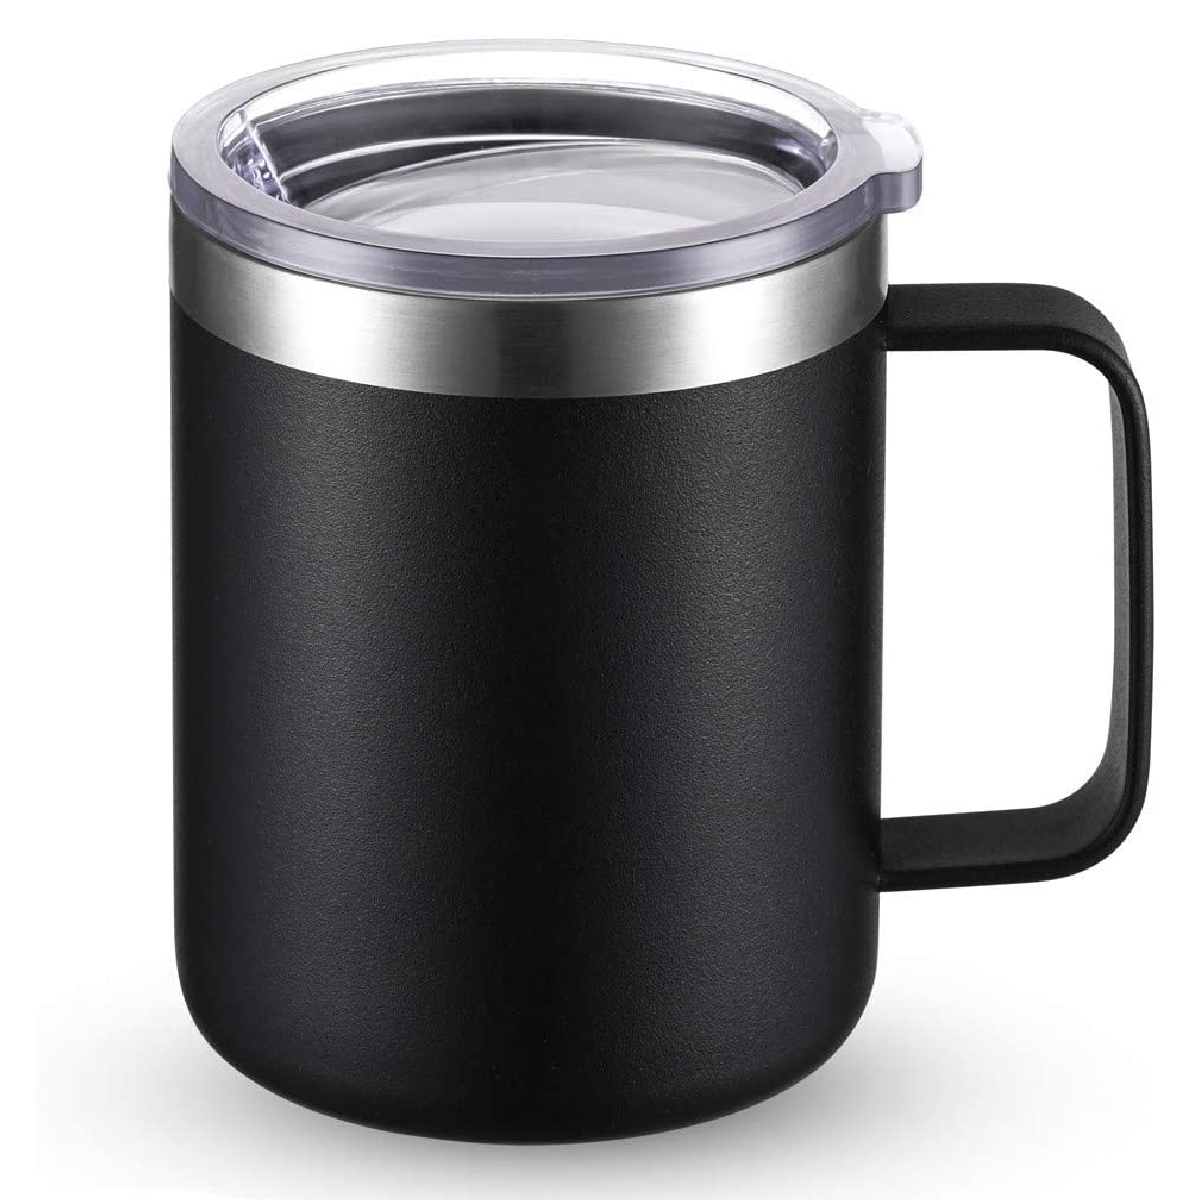 CIVAGO 12oz Stainless Steel Insulated Coffee Mug